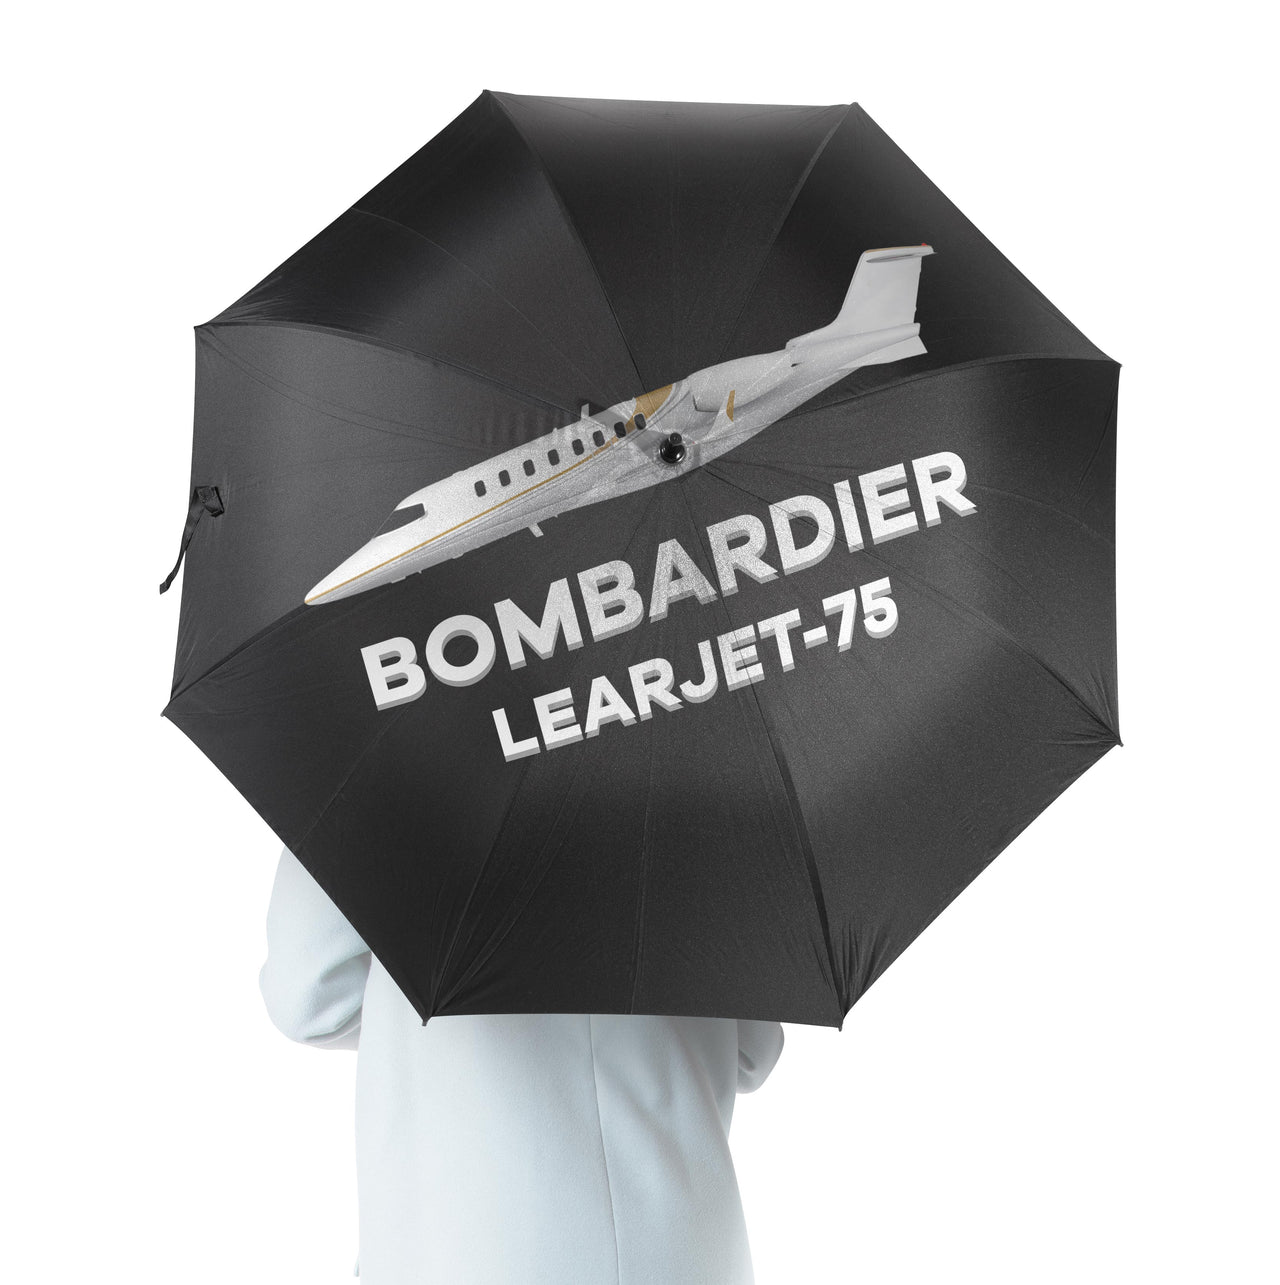 The Bombardier Learjet 75 Designed Umbrella